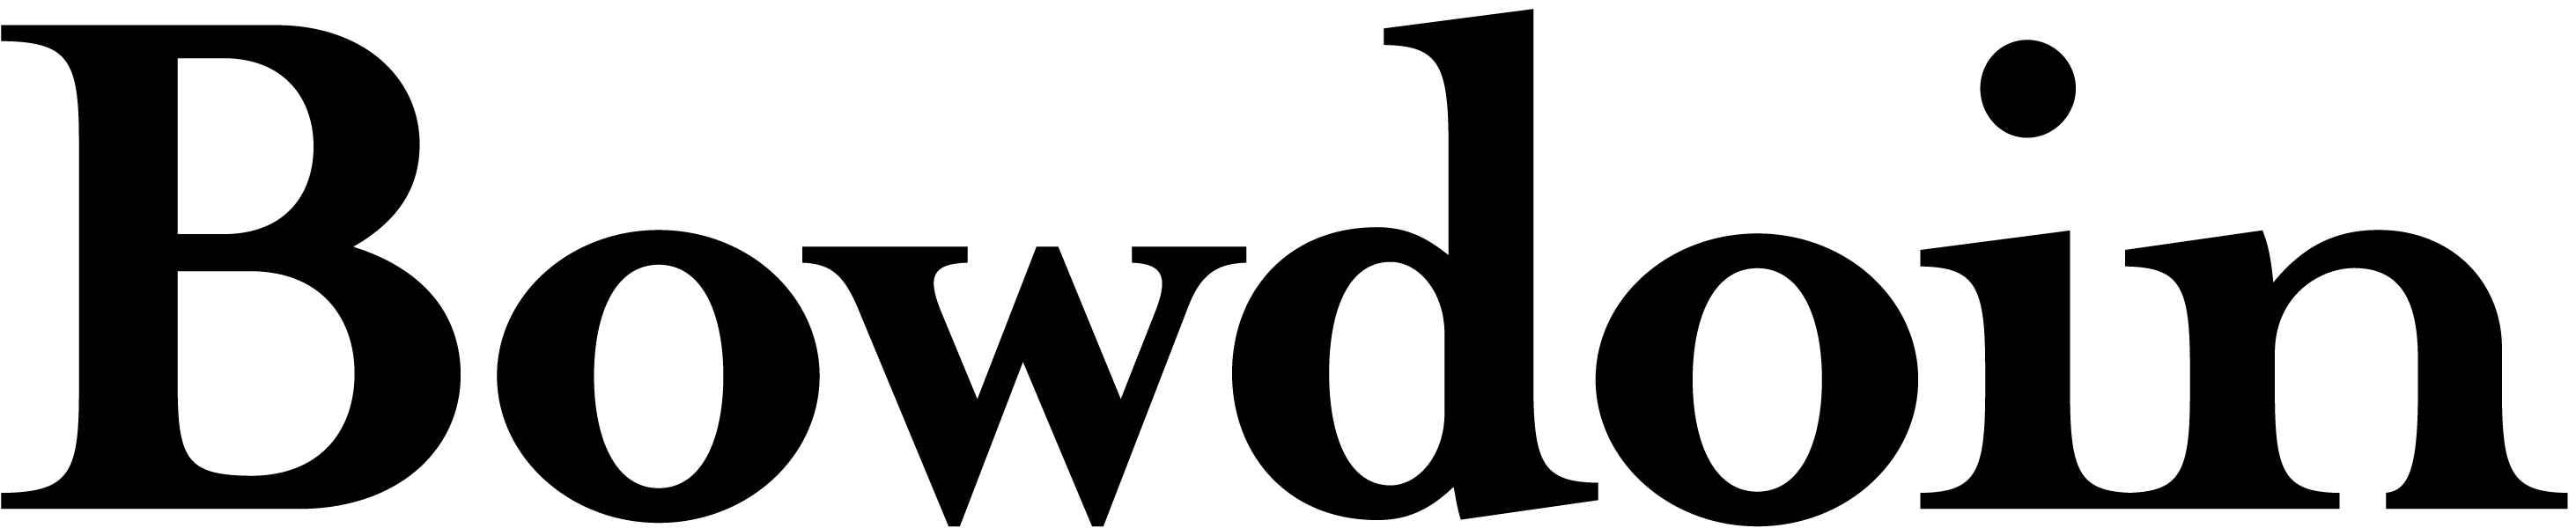 Bowdoin College Logo png